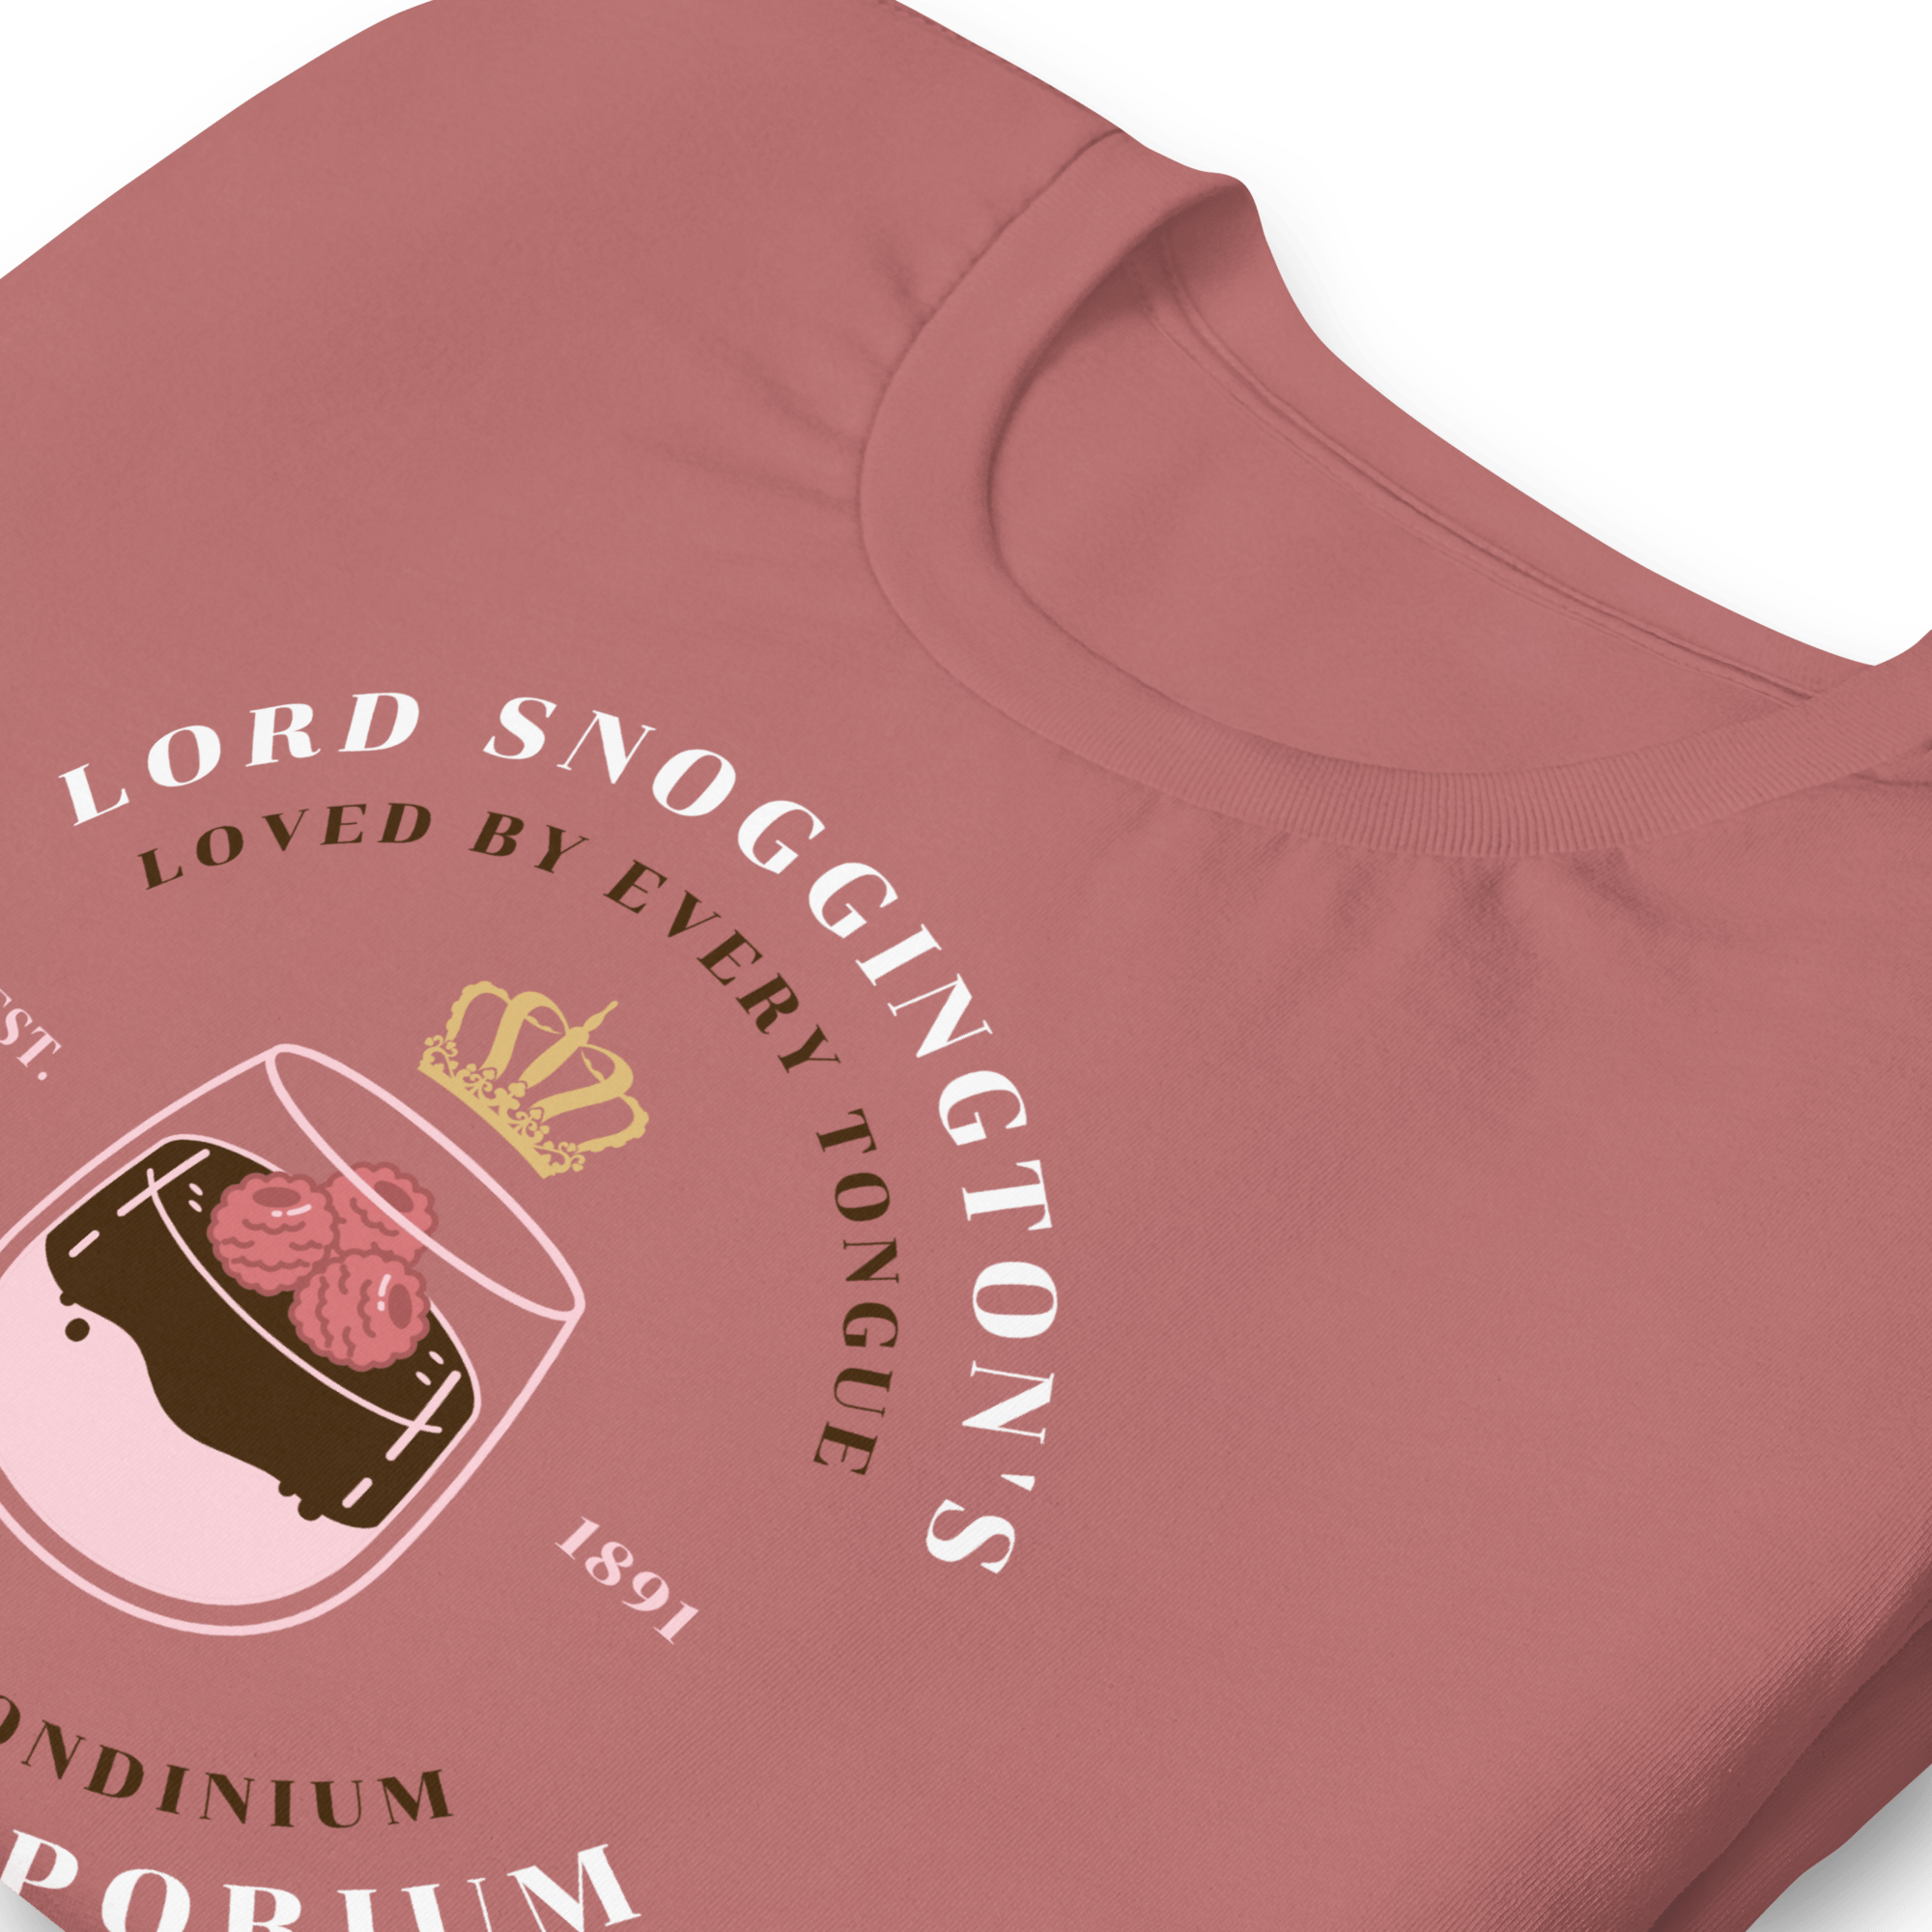 Lord Snoggington's T-Shirt Shirts & Tops Jolly & Goode